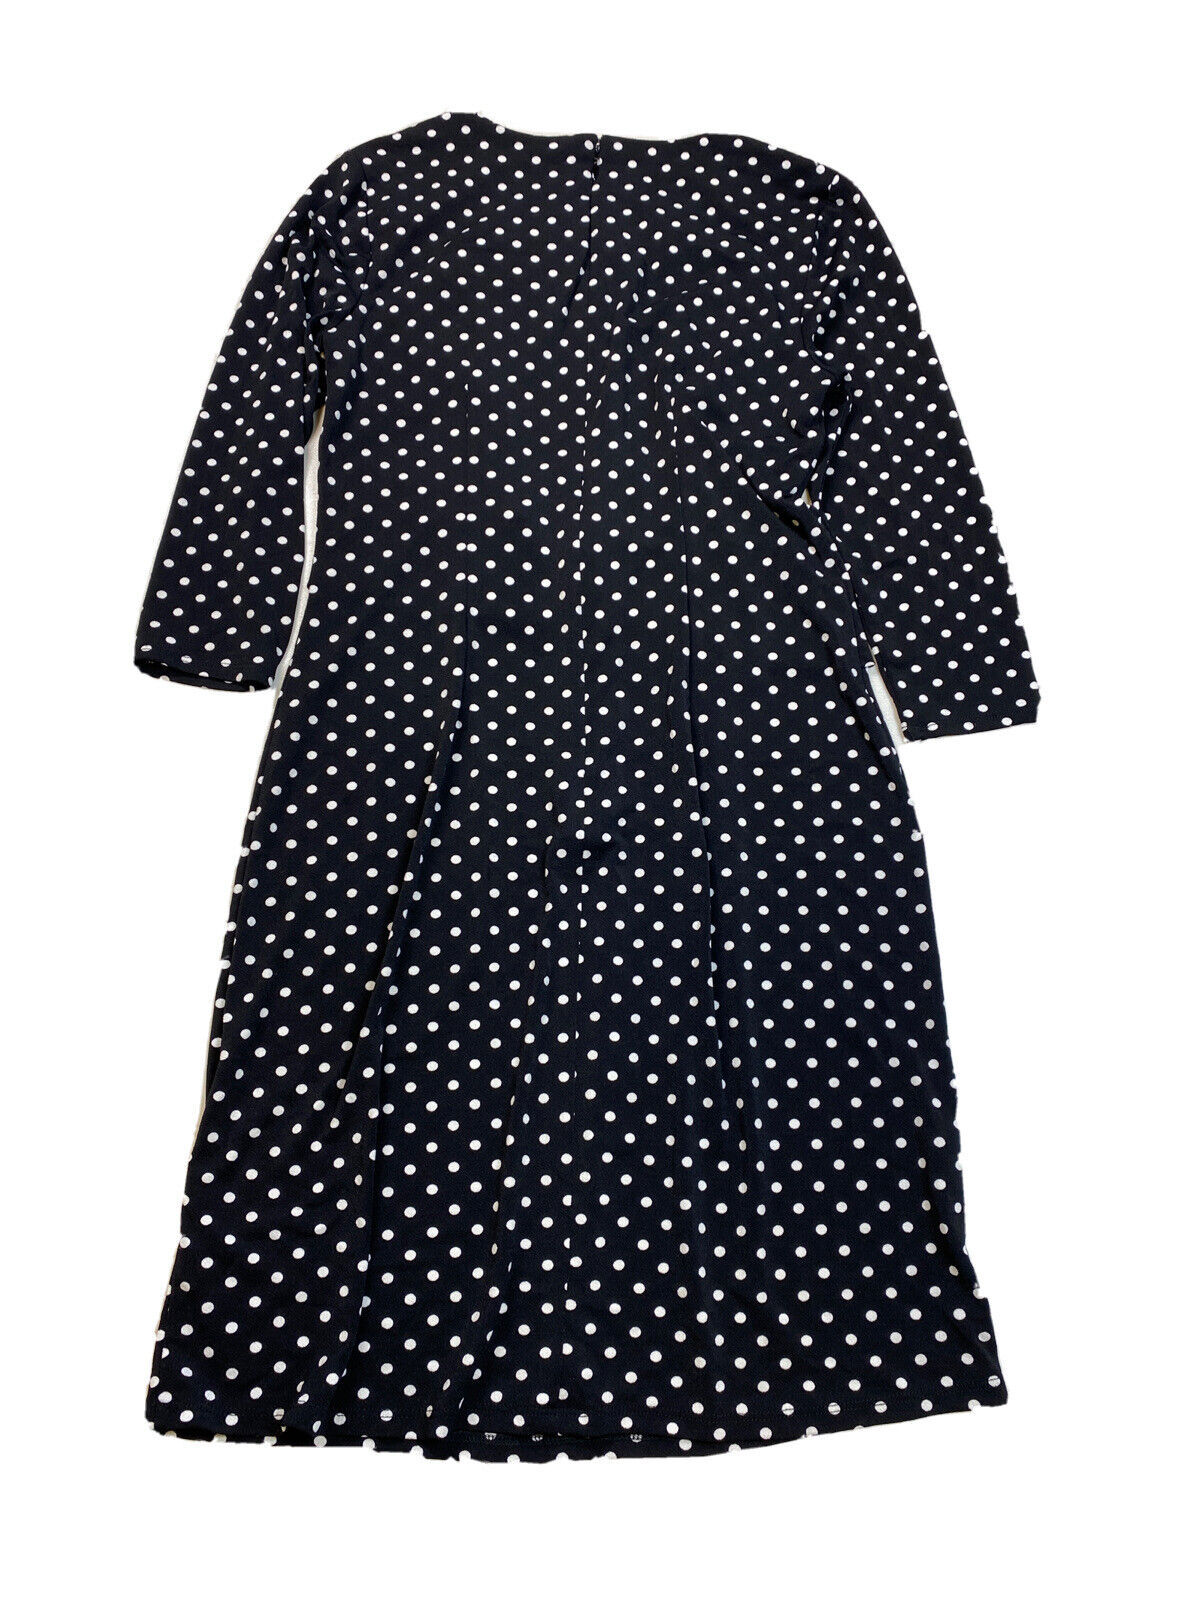 Ann Taylor Women's Black Polka Dot 3/4 Sleeve Blouson Dress - Petite XSP